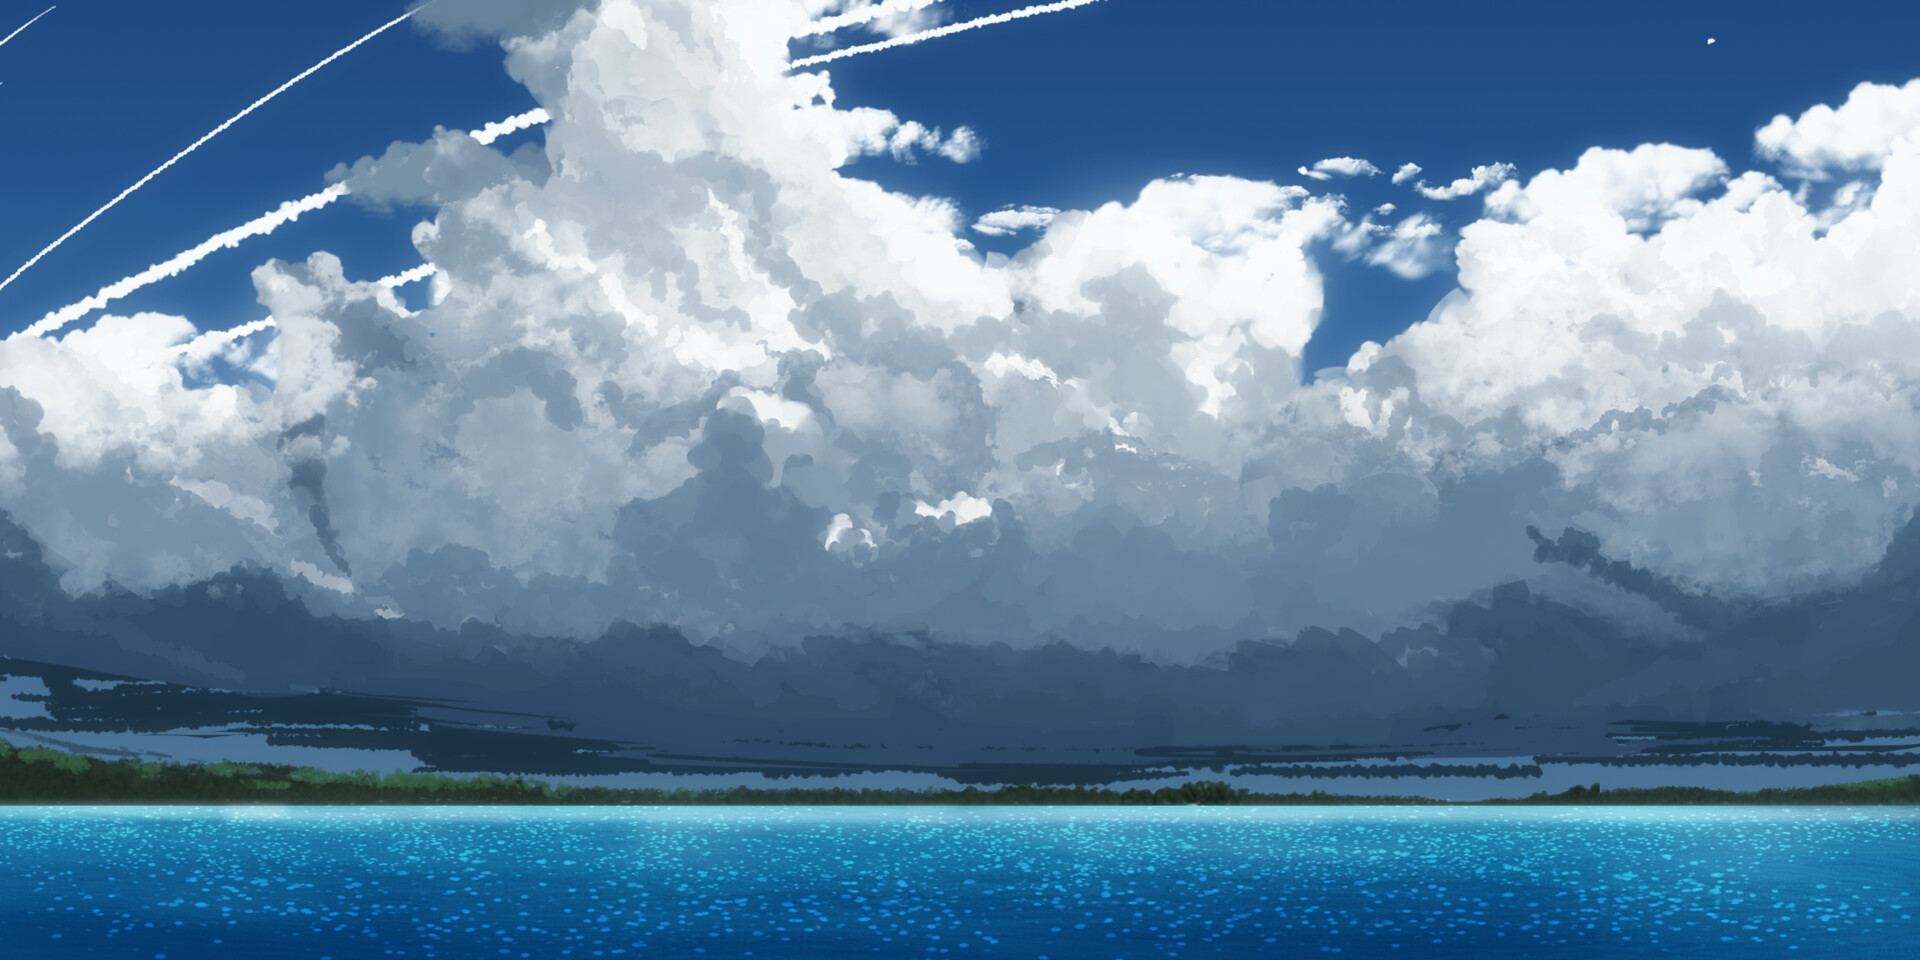 ArtStation  Anime Styled Landscape  Ocean View 1